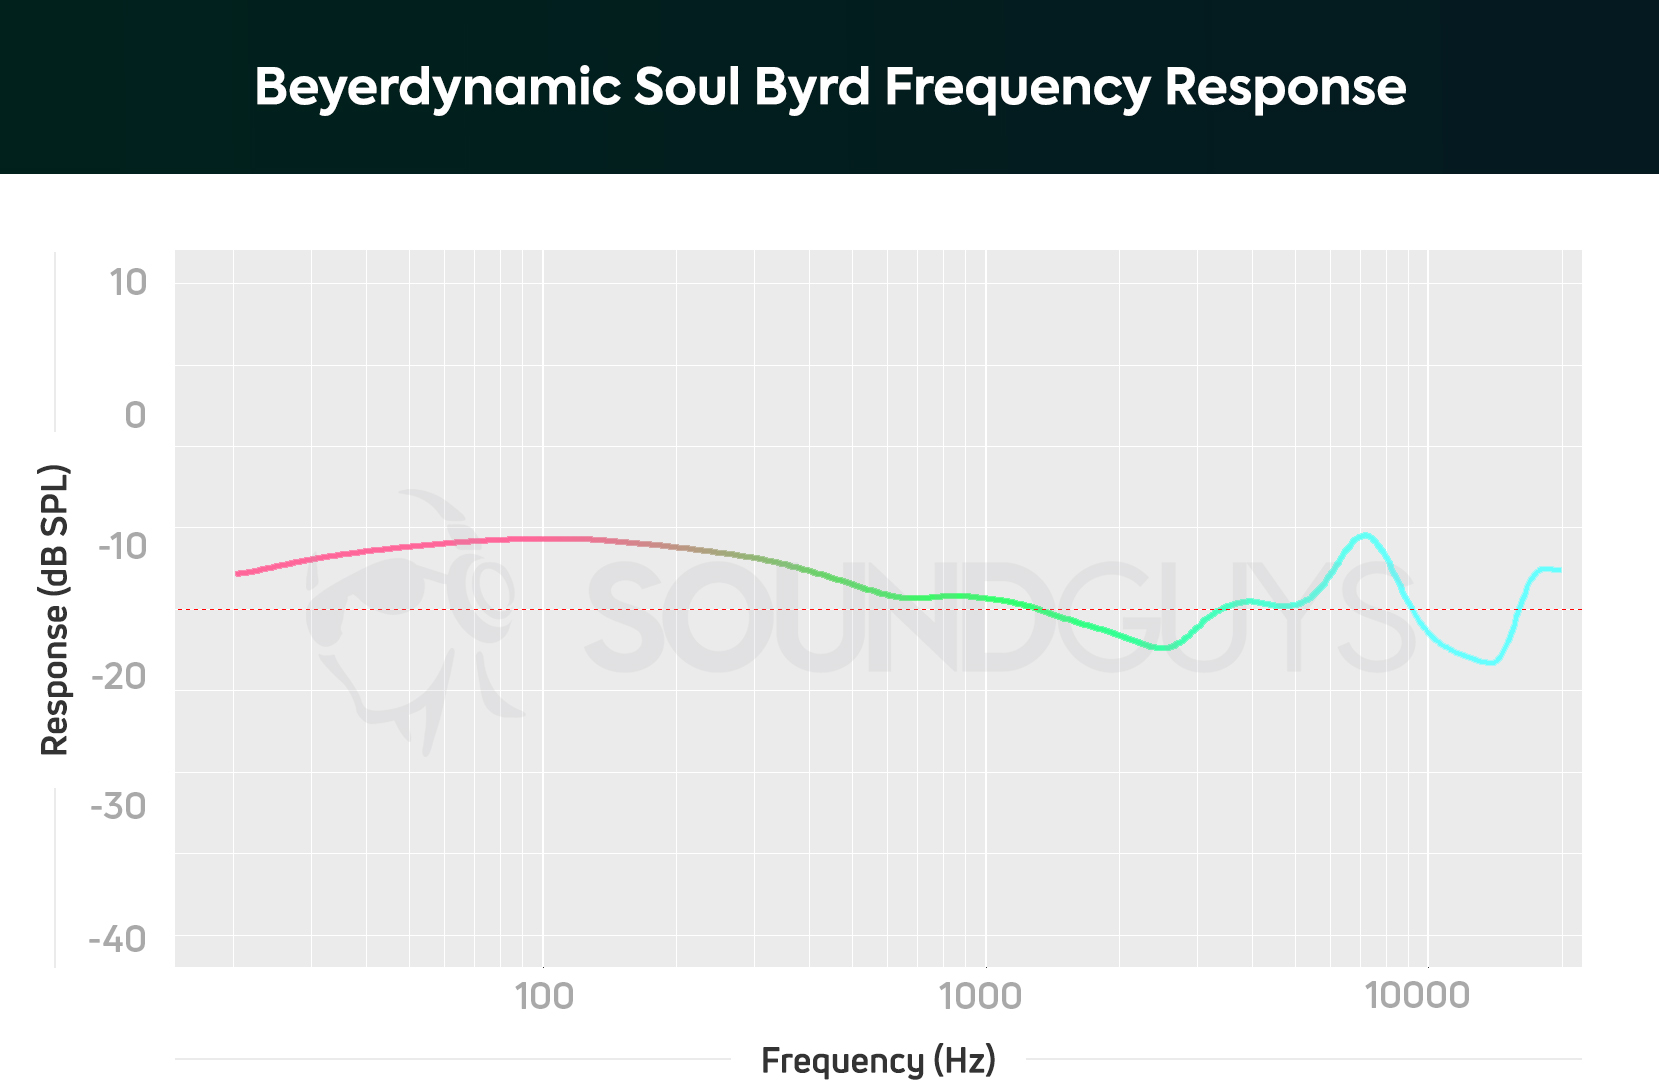 Beyerdynamic Soul Byrd frequency response chart.